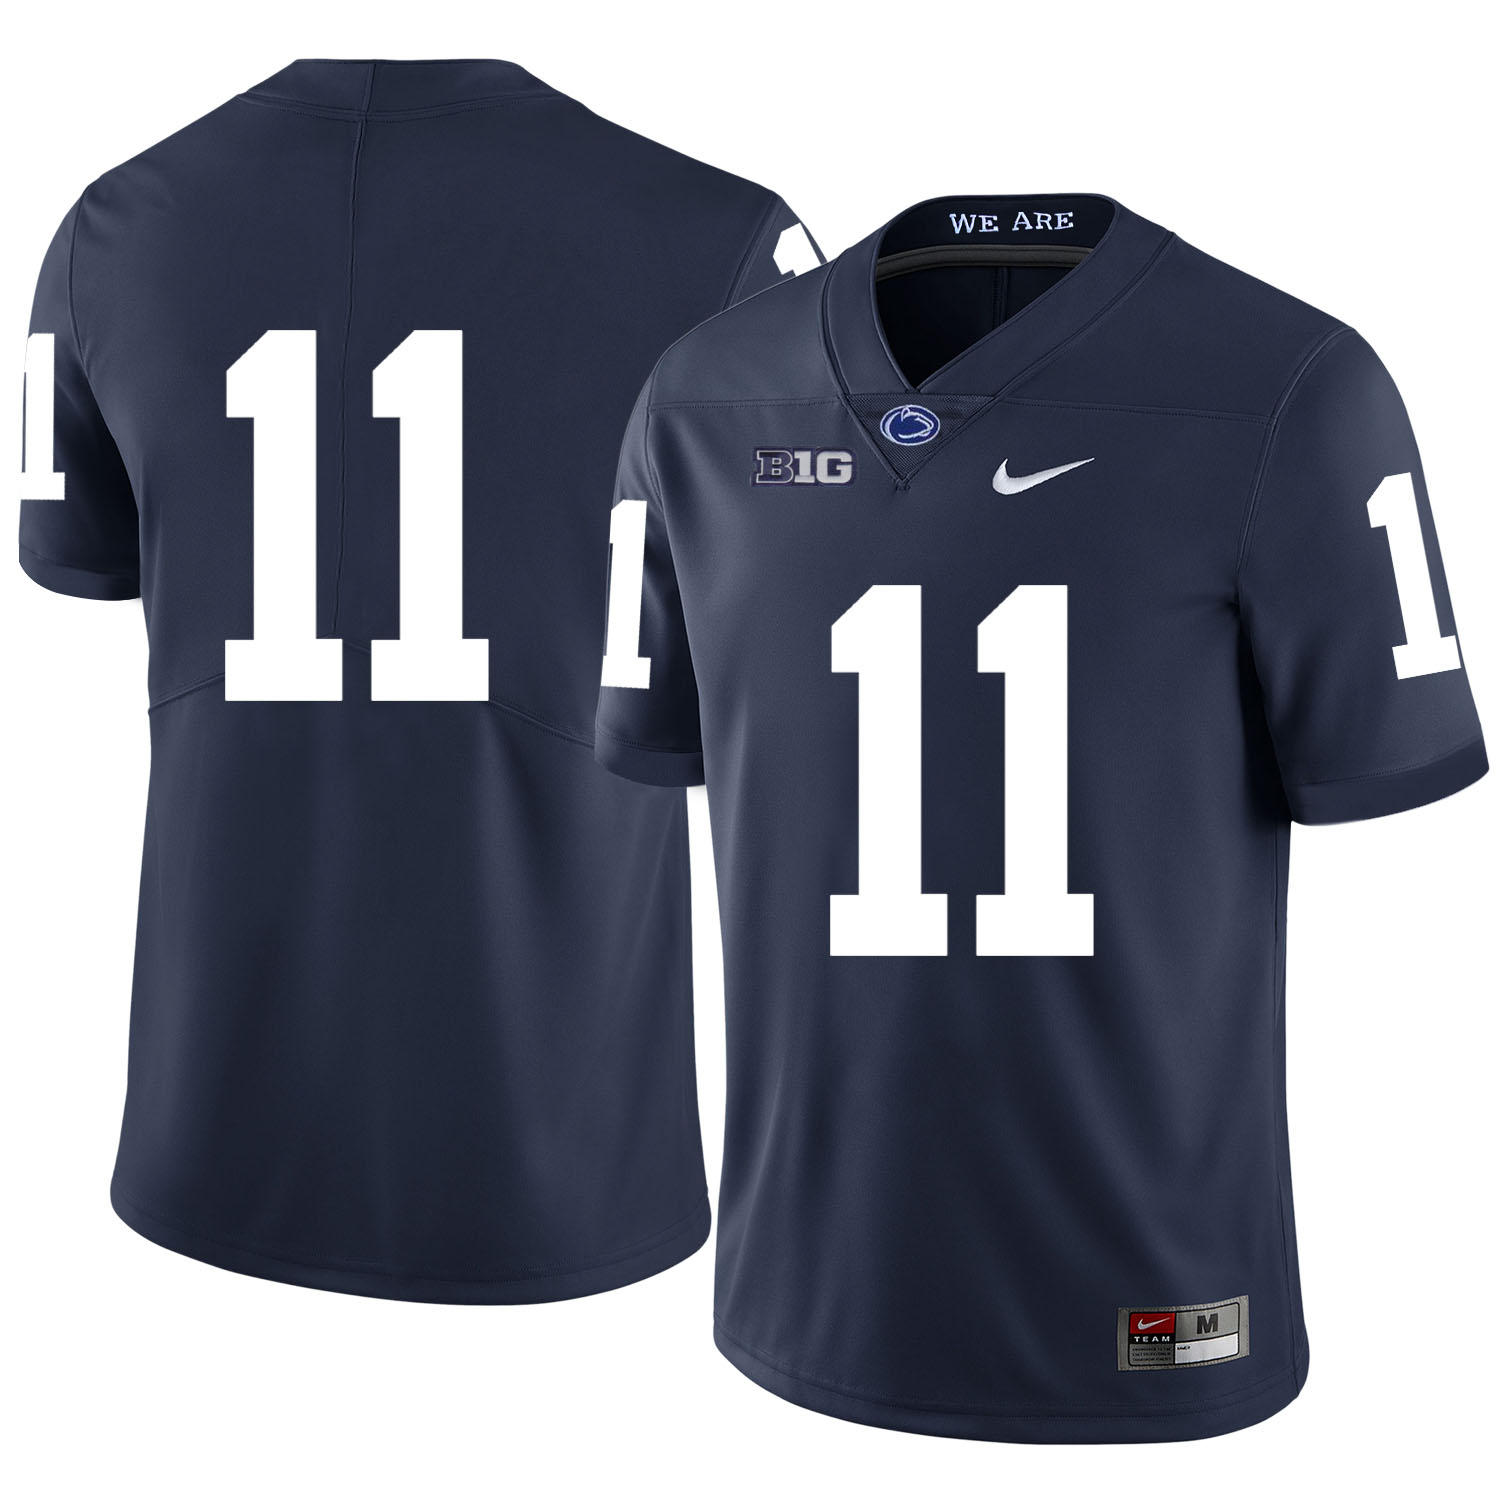 Penn State Nittany Lions 11 Matt McGloin Navy Nike College Football Jersey